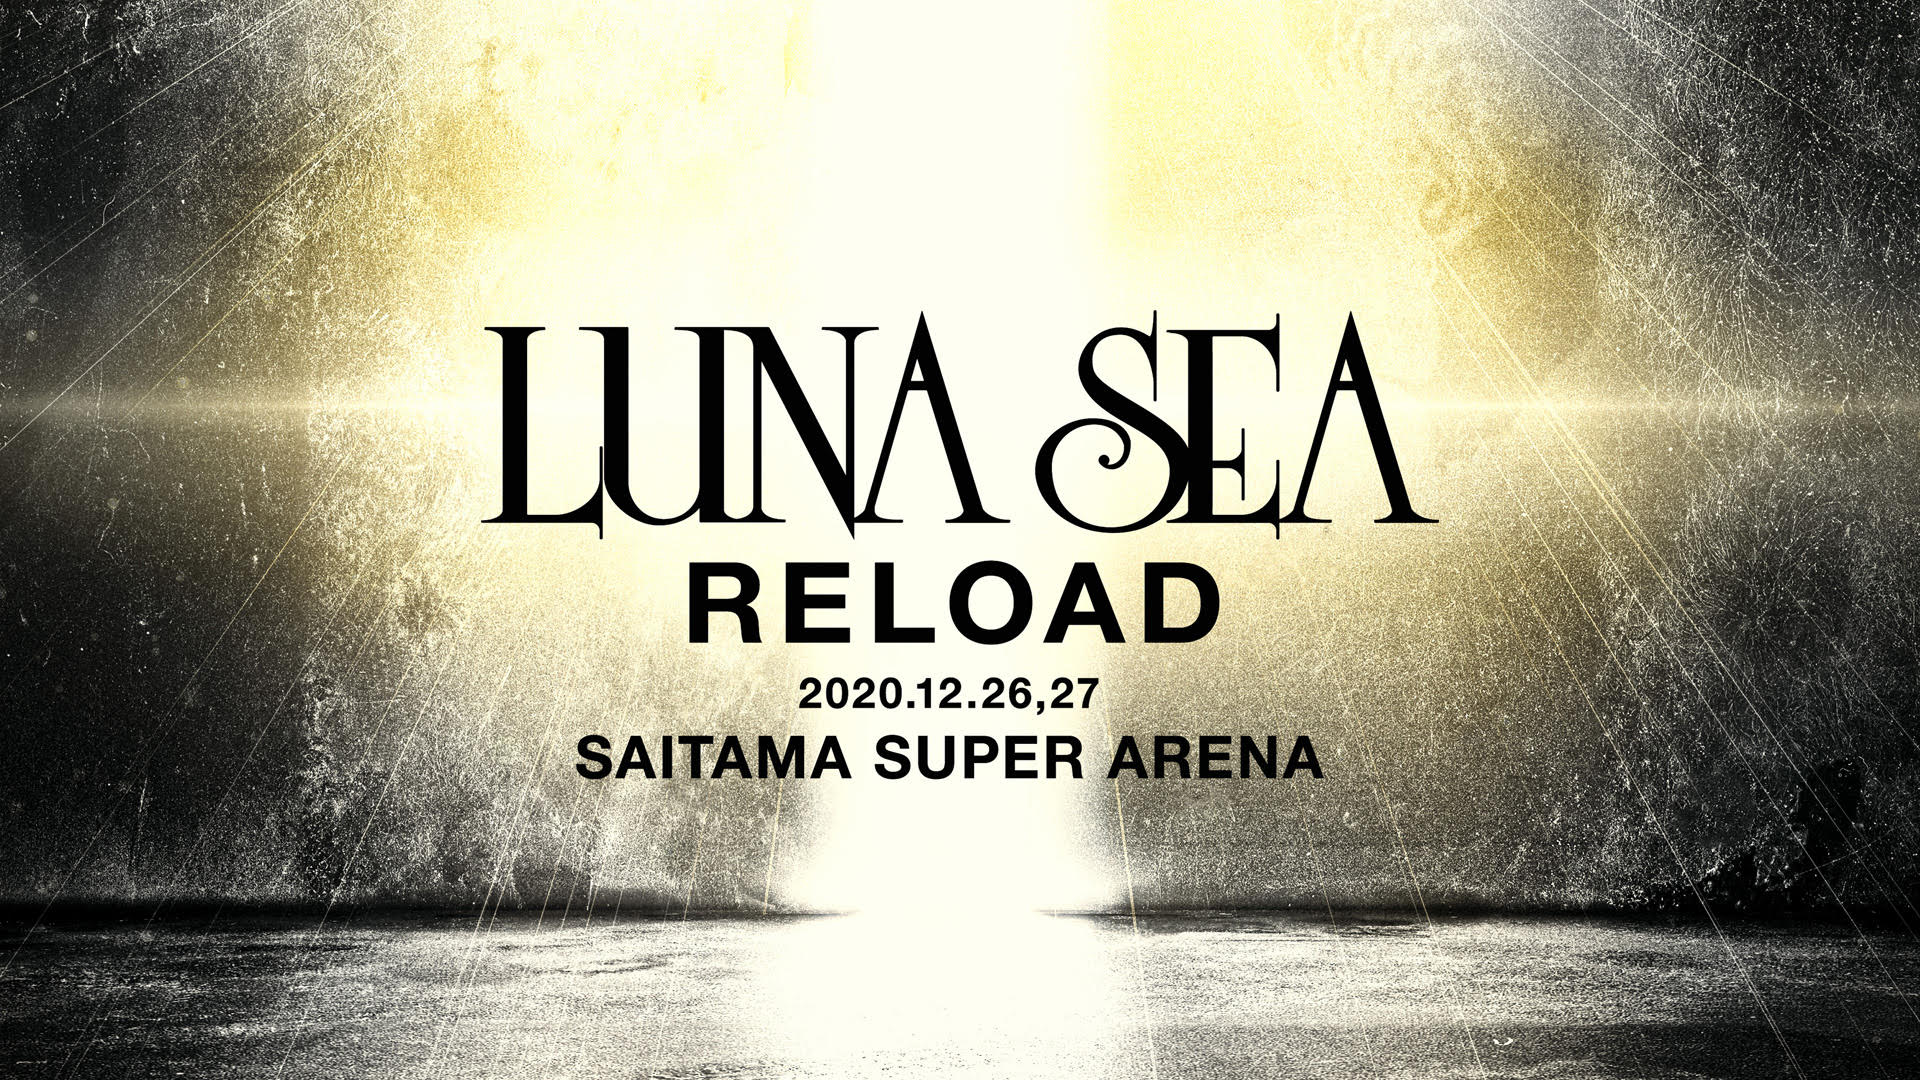 LUNA SEA -RELOAD-” Live performance will be held at Saitama Super Arena 2  DAYS!! | SYNC NETWORK JAPAN